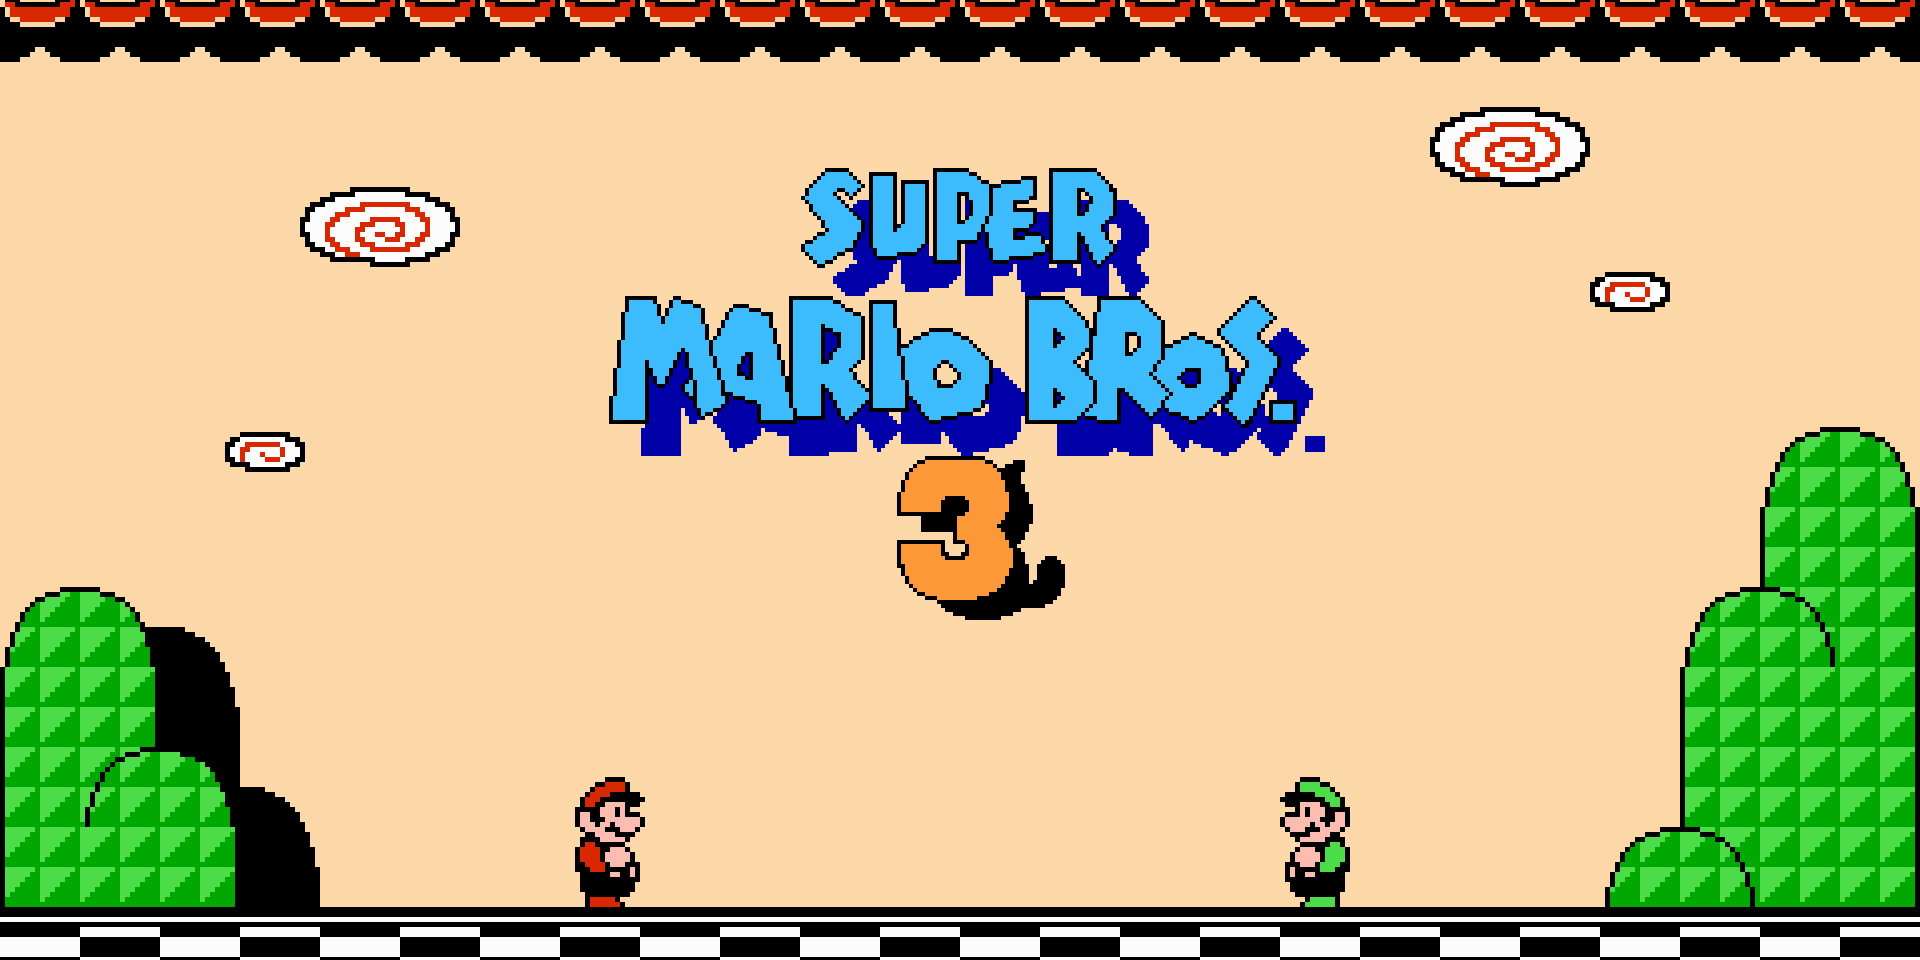 Super Mario Bros Title Screen